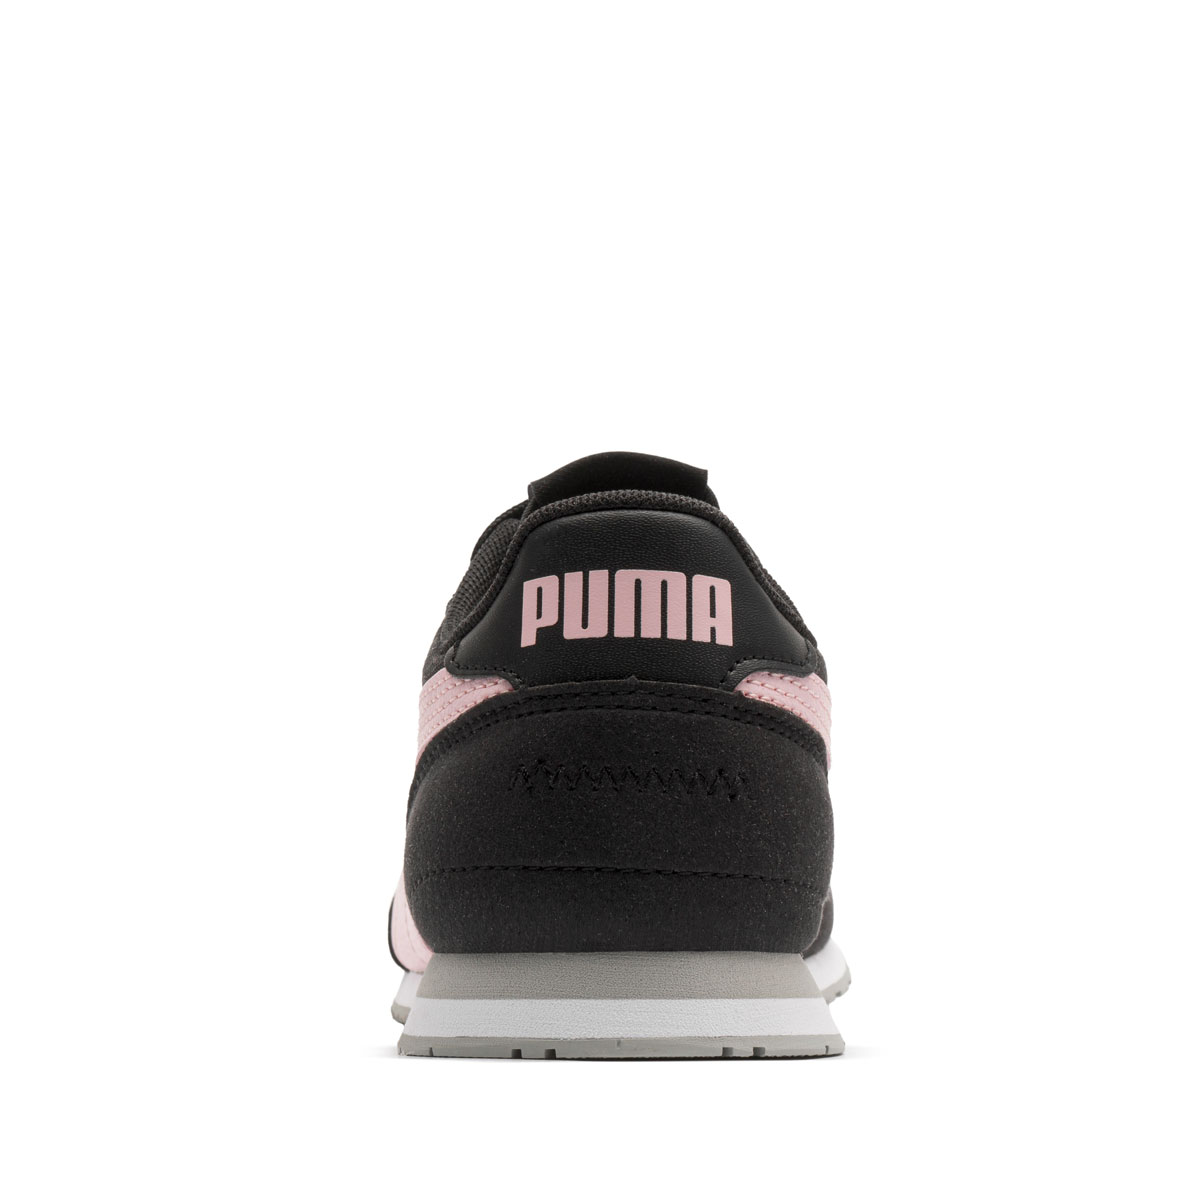  Puma ST Runner Essential  383055-05